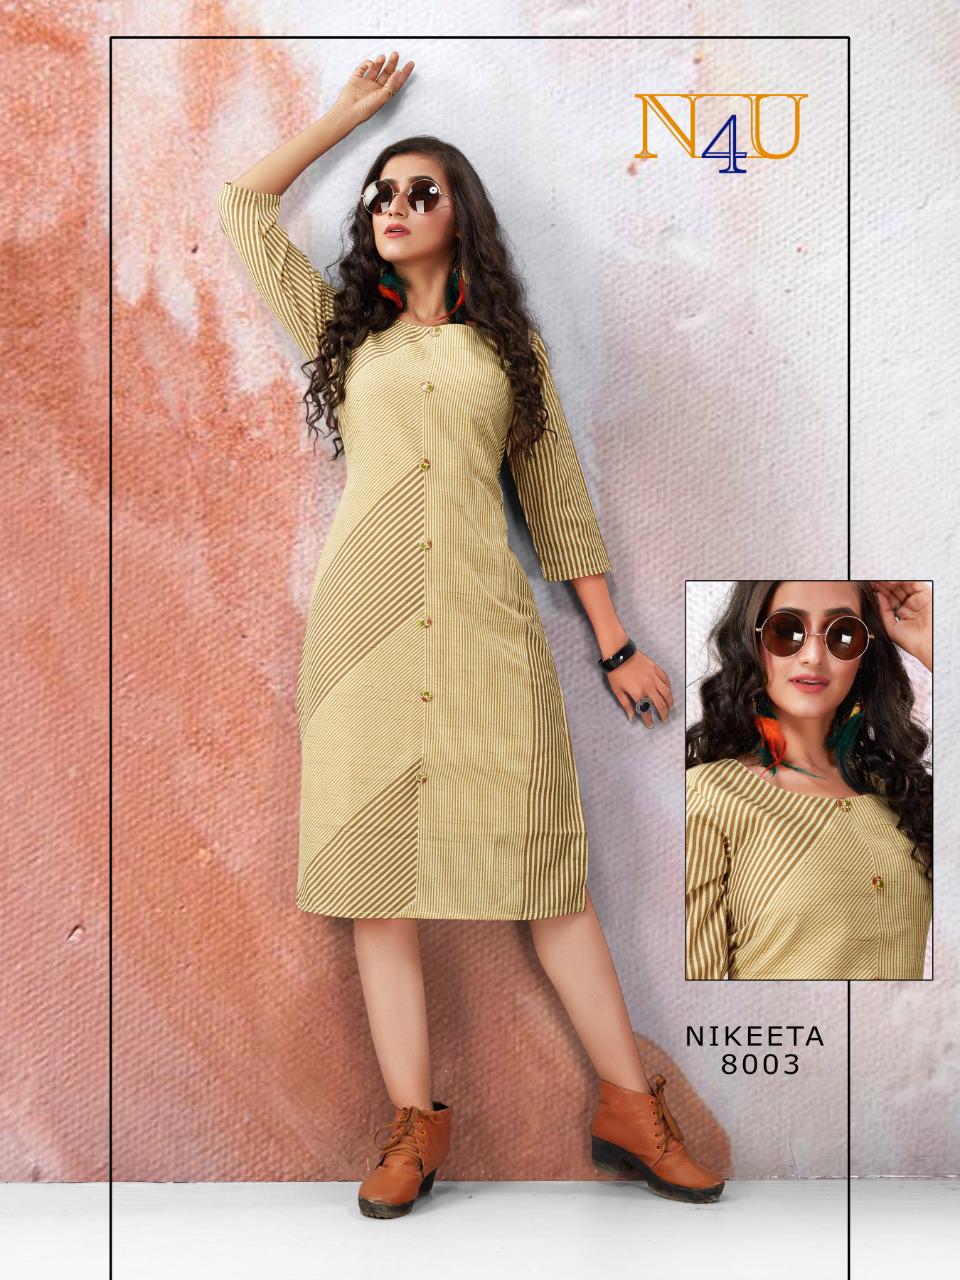 Neha fashion n4u Nikeeta cotton daily wear kurties latest 2020 collection